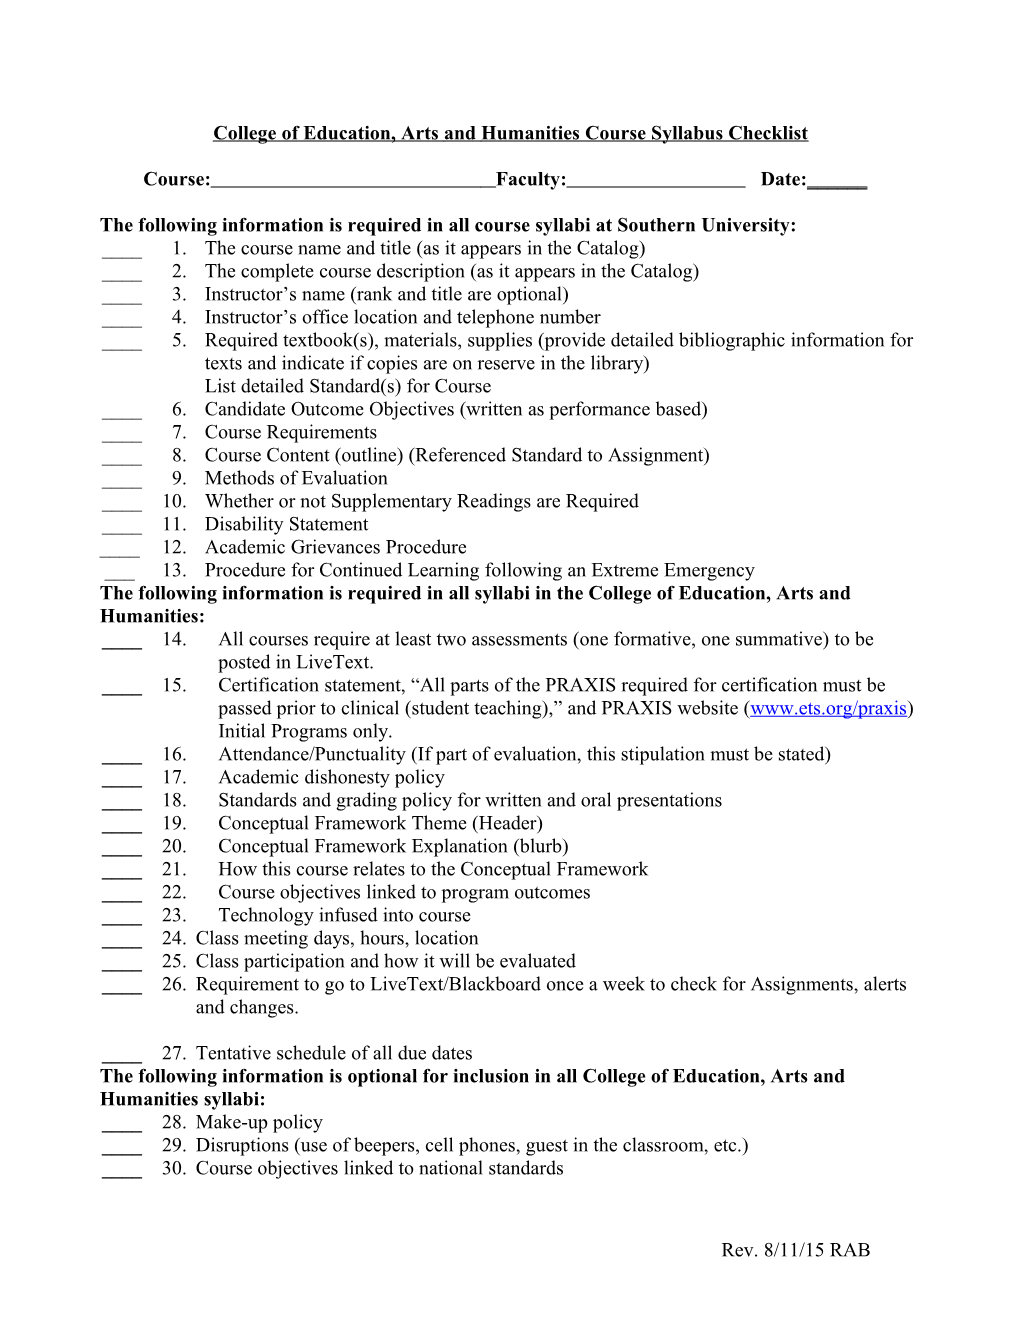 College of Education Course Syllabus Checklist